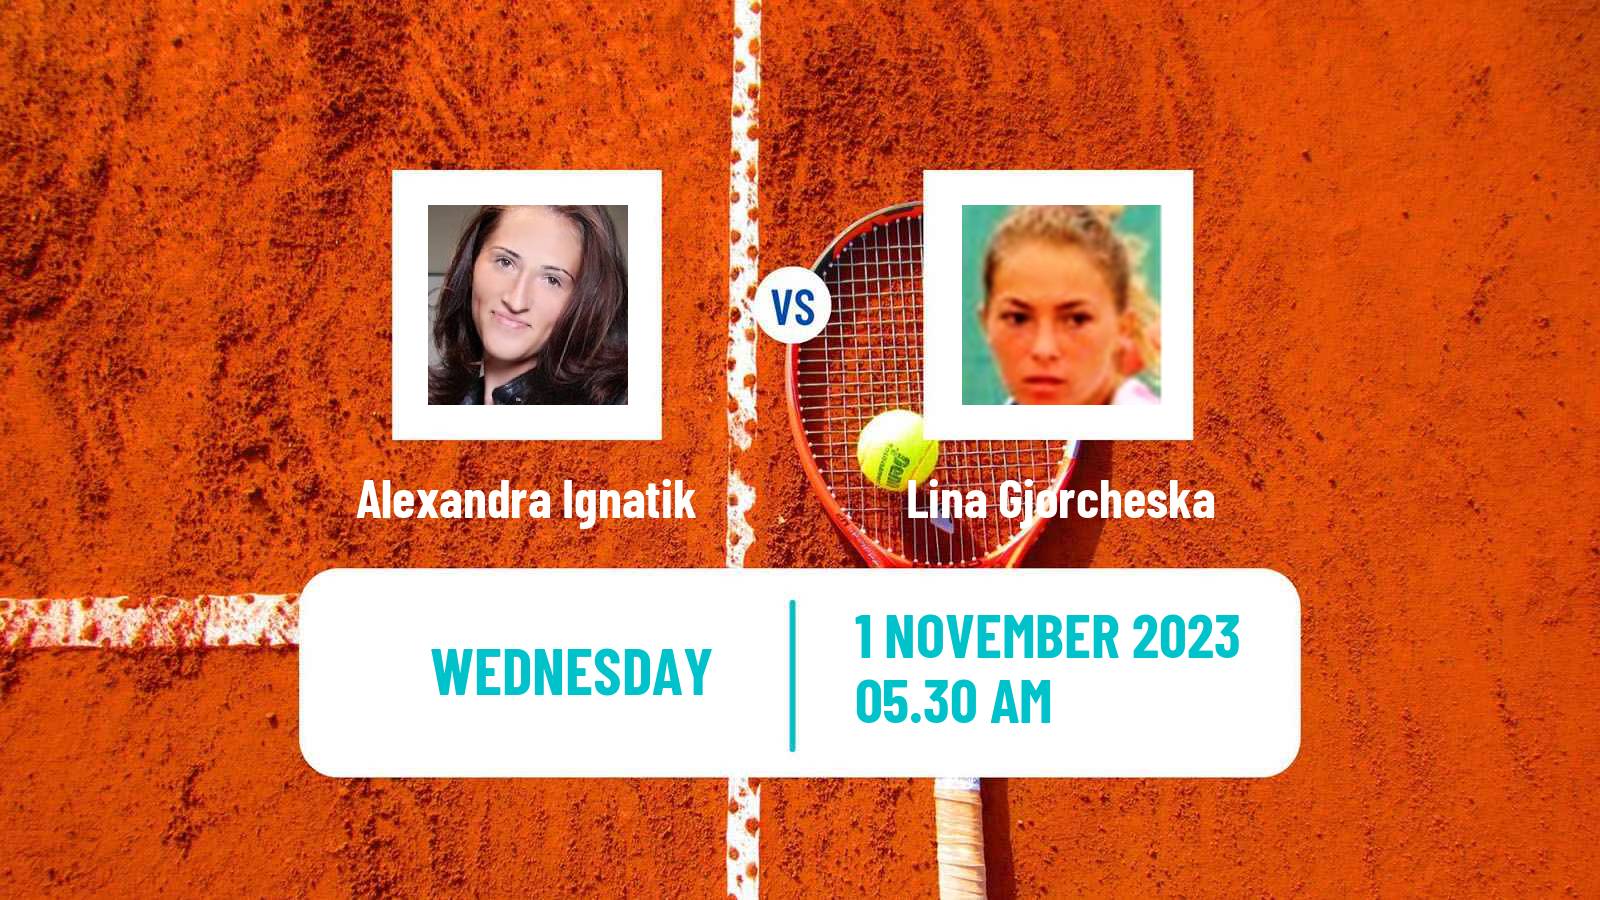 Tennis ITF W40 Heraklion Women Alexandra Ignatik - Lina Gjorcheska